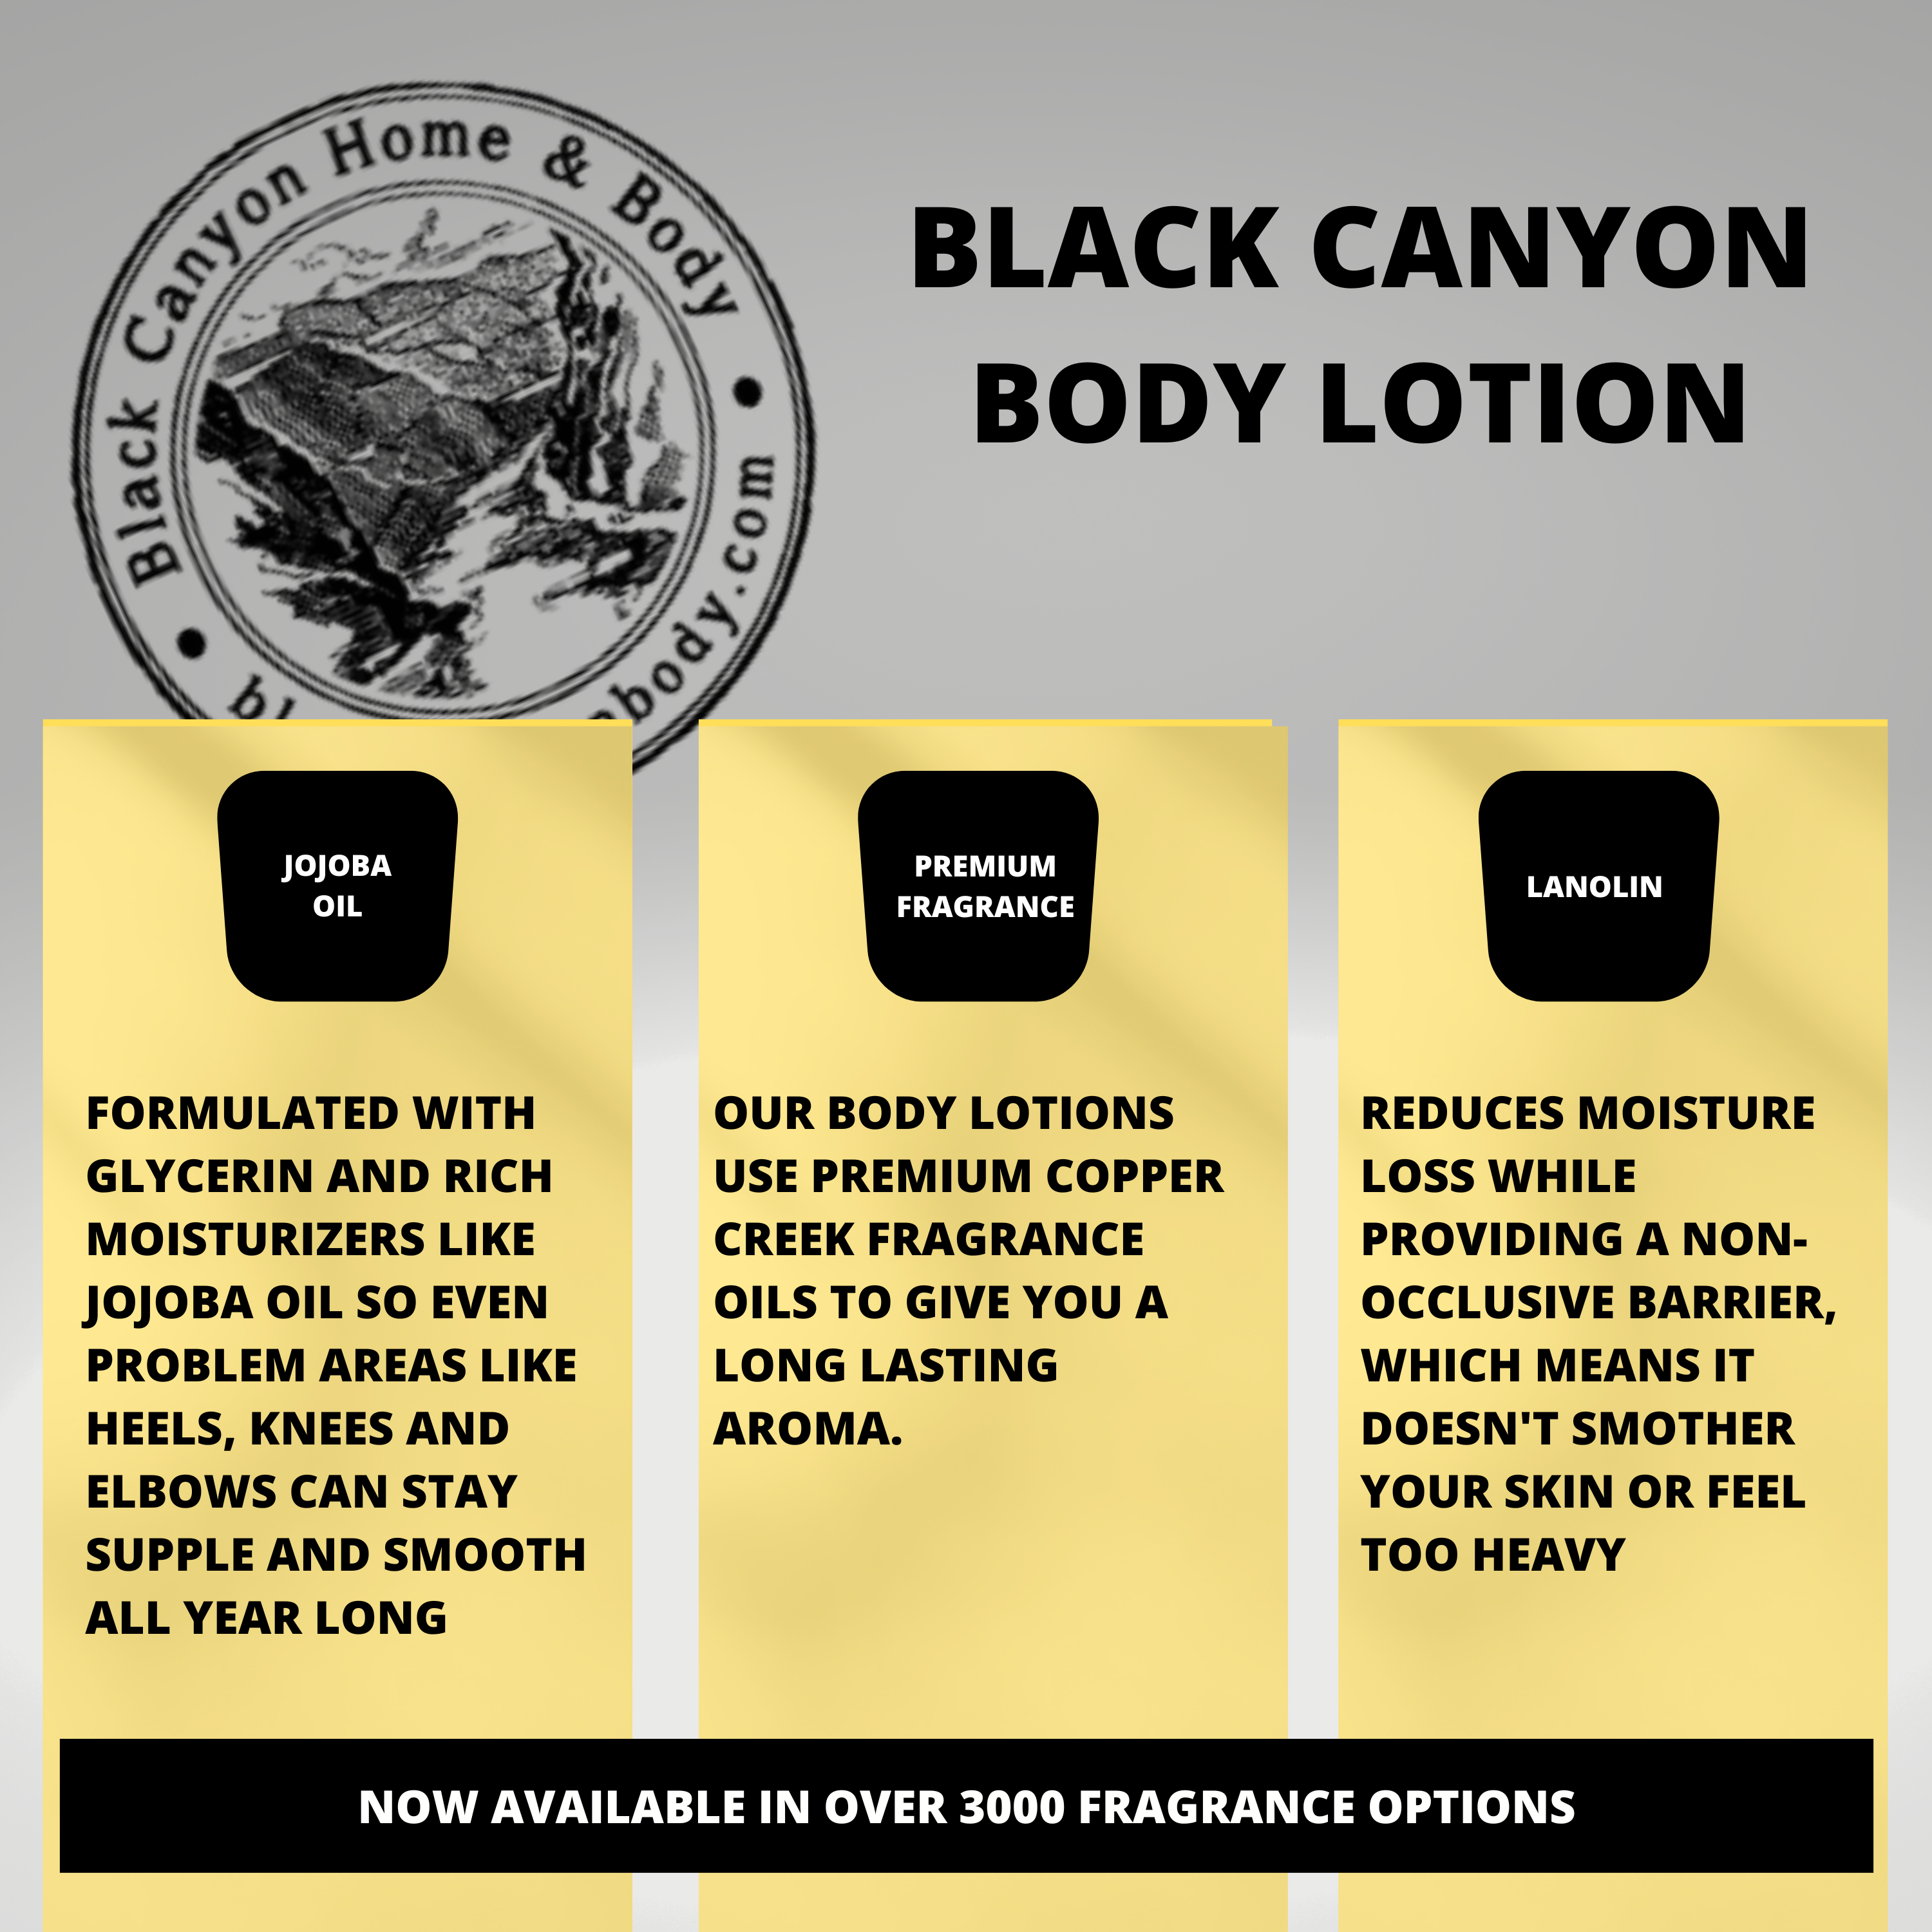 Black Canyon Green Tea & Lemongrass Scented Luxury Body Lotion with Lanolin and Jojoba Oil